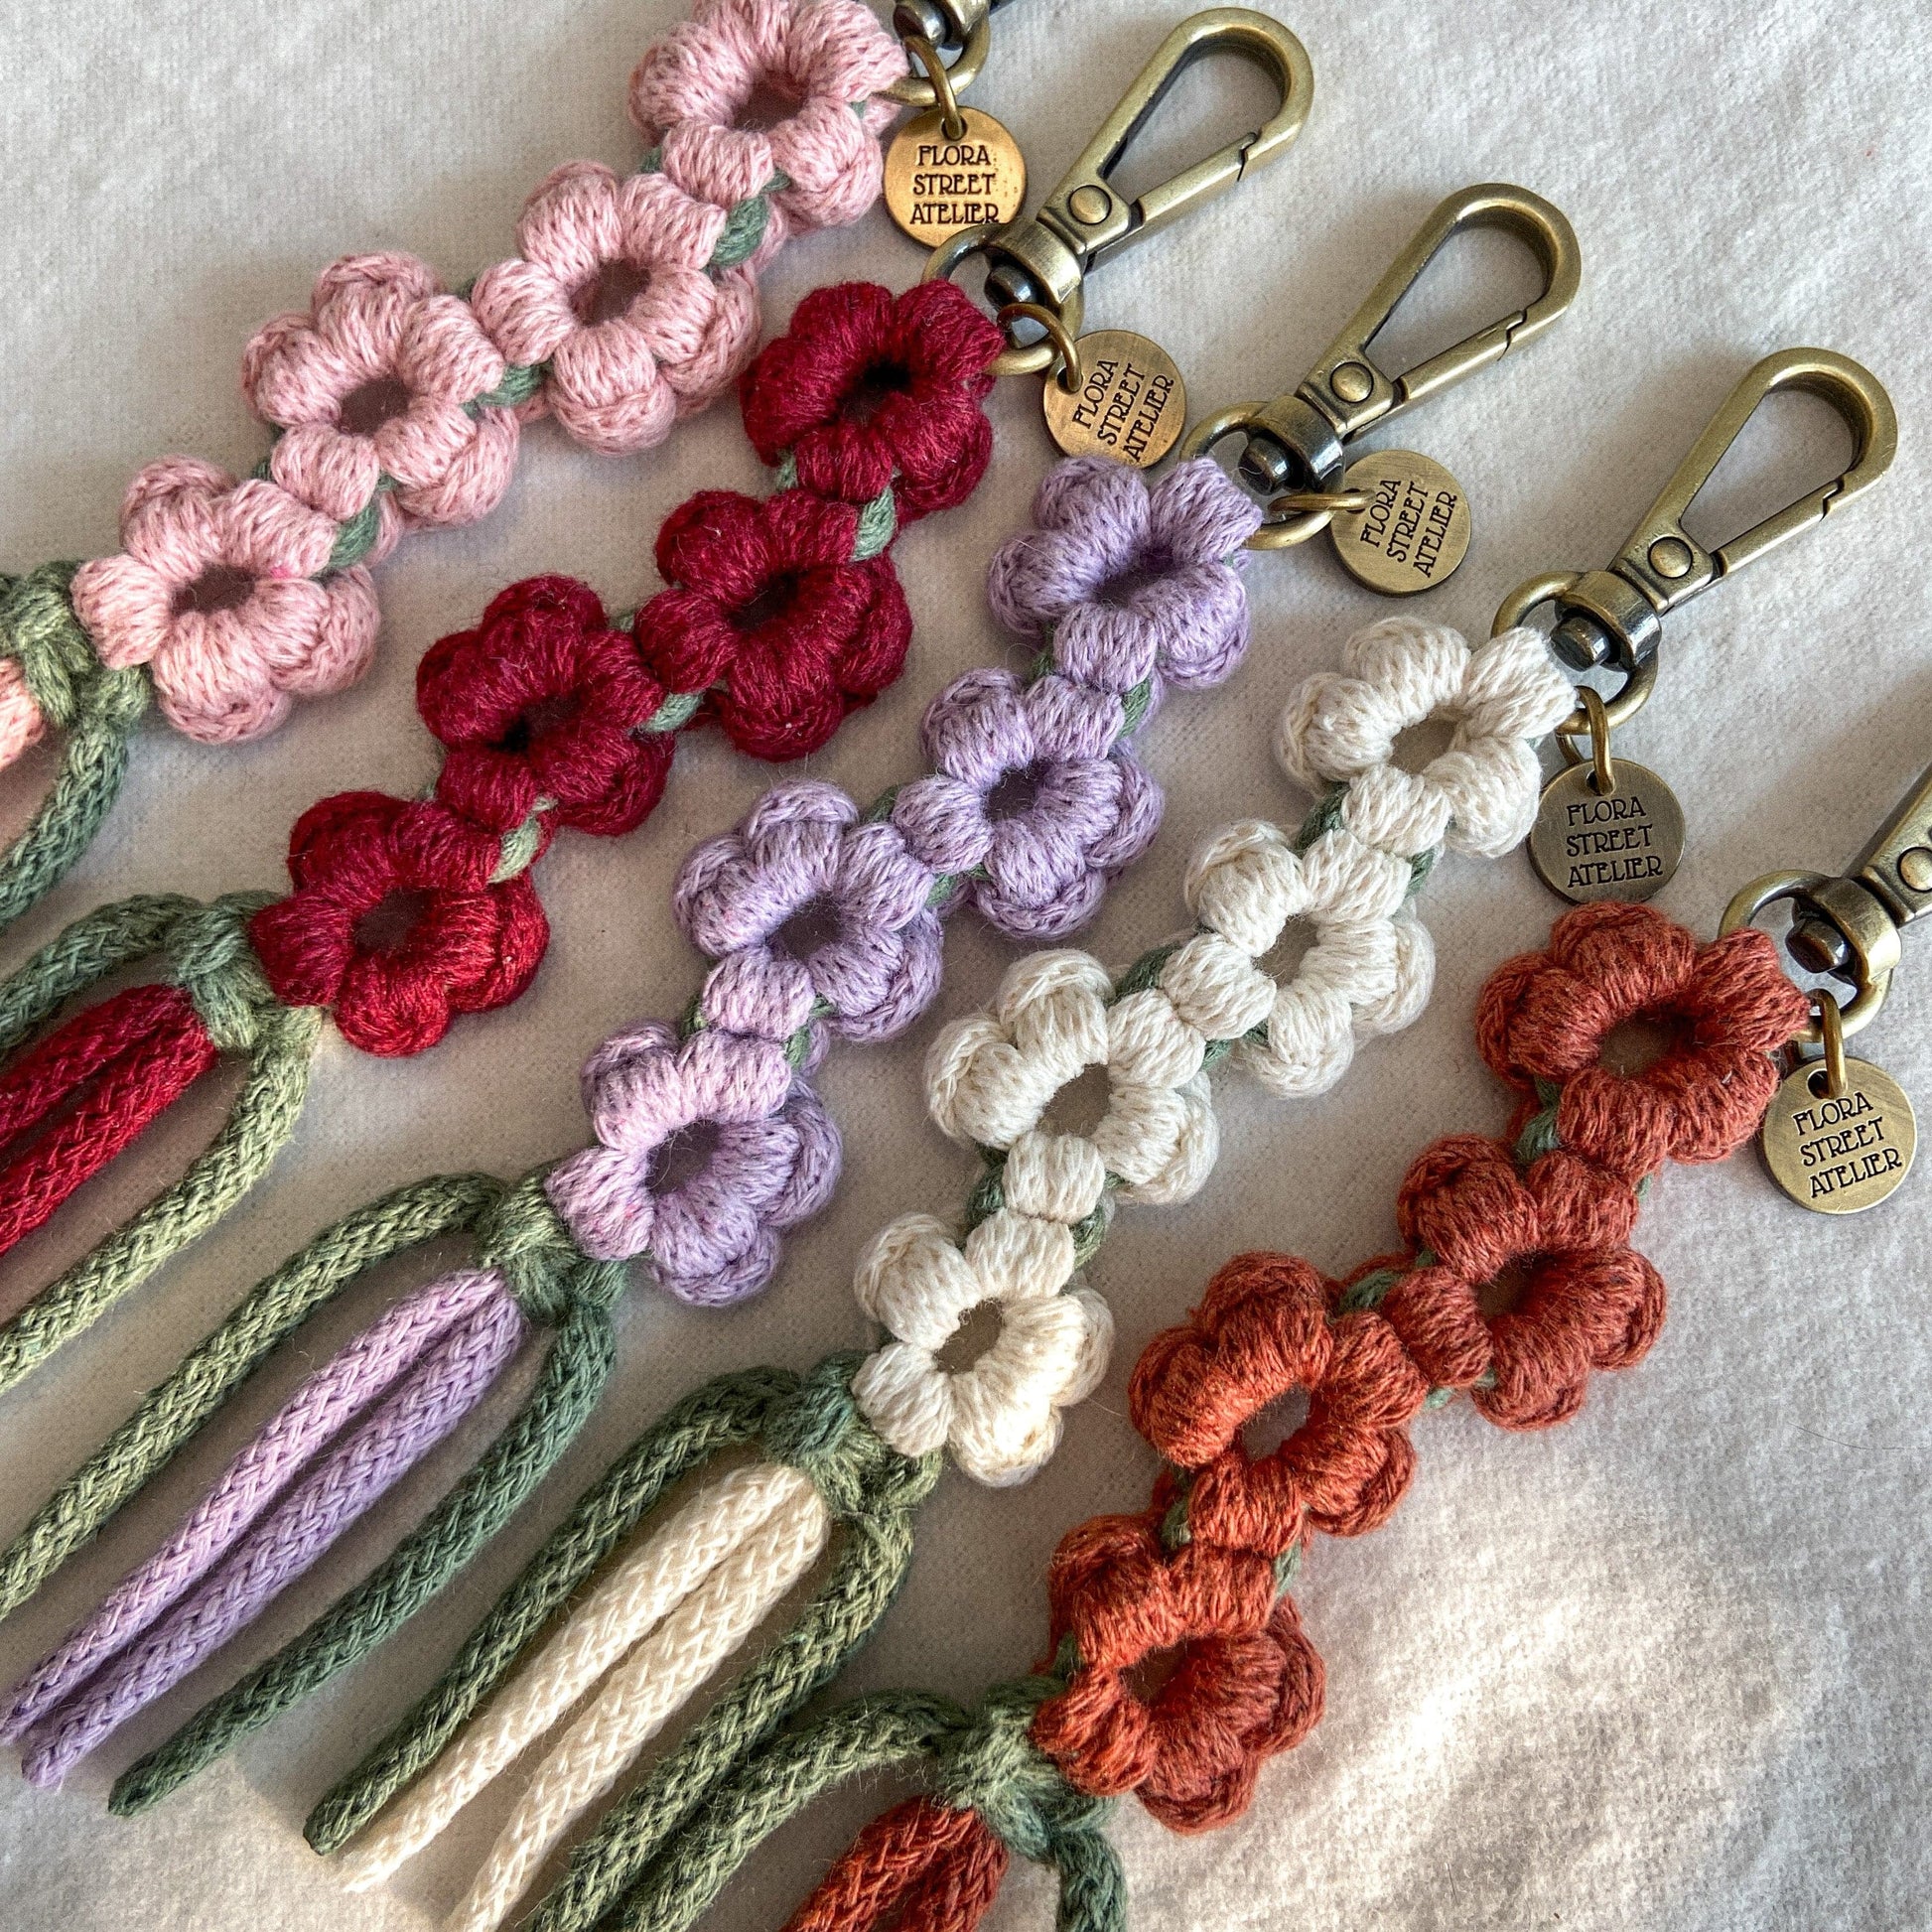 Flora Street Atelier Handmade Macrame Keychain "Wild Flower" Macrame Key Ring | Bag Charm